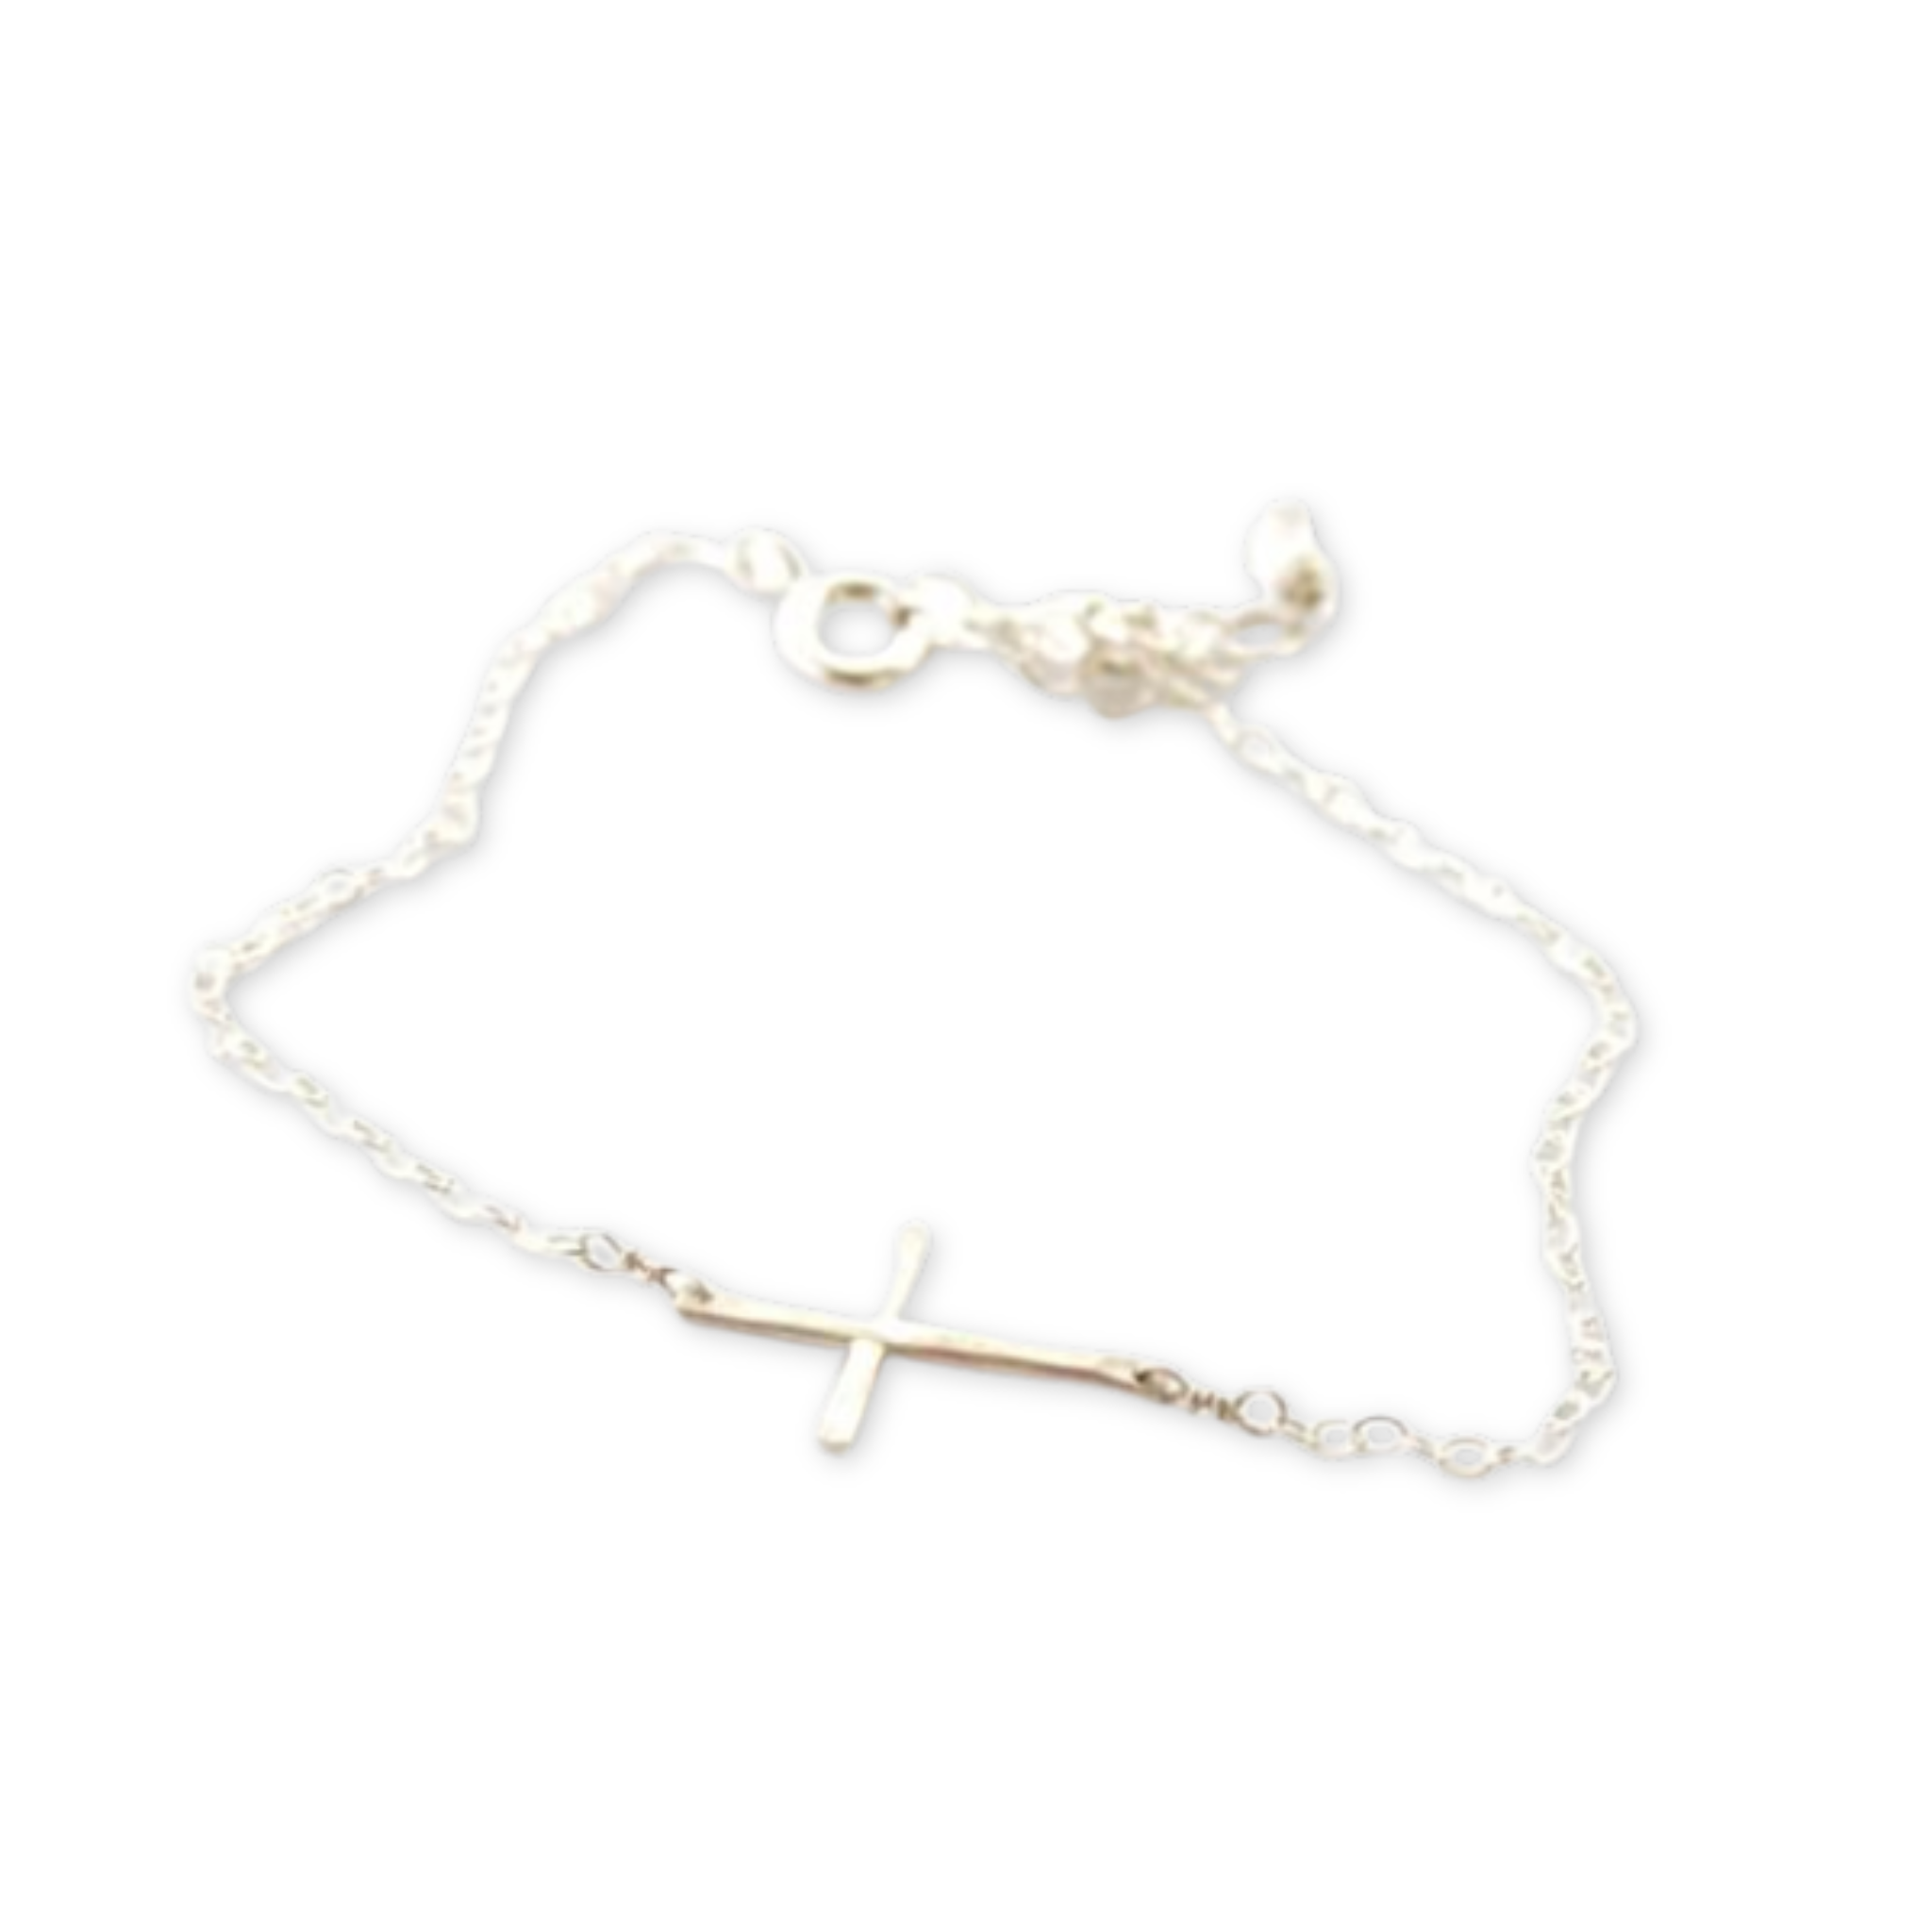 chain bracelet with a sideways cross